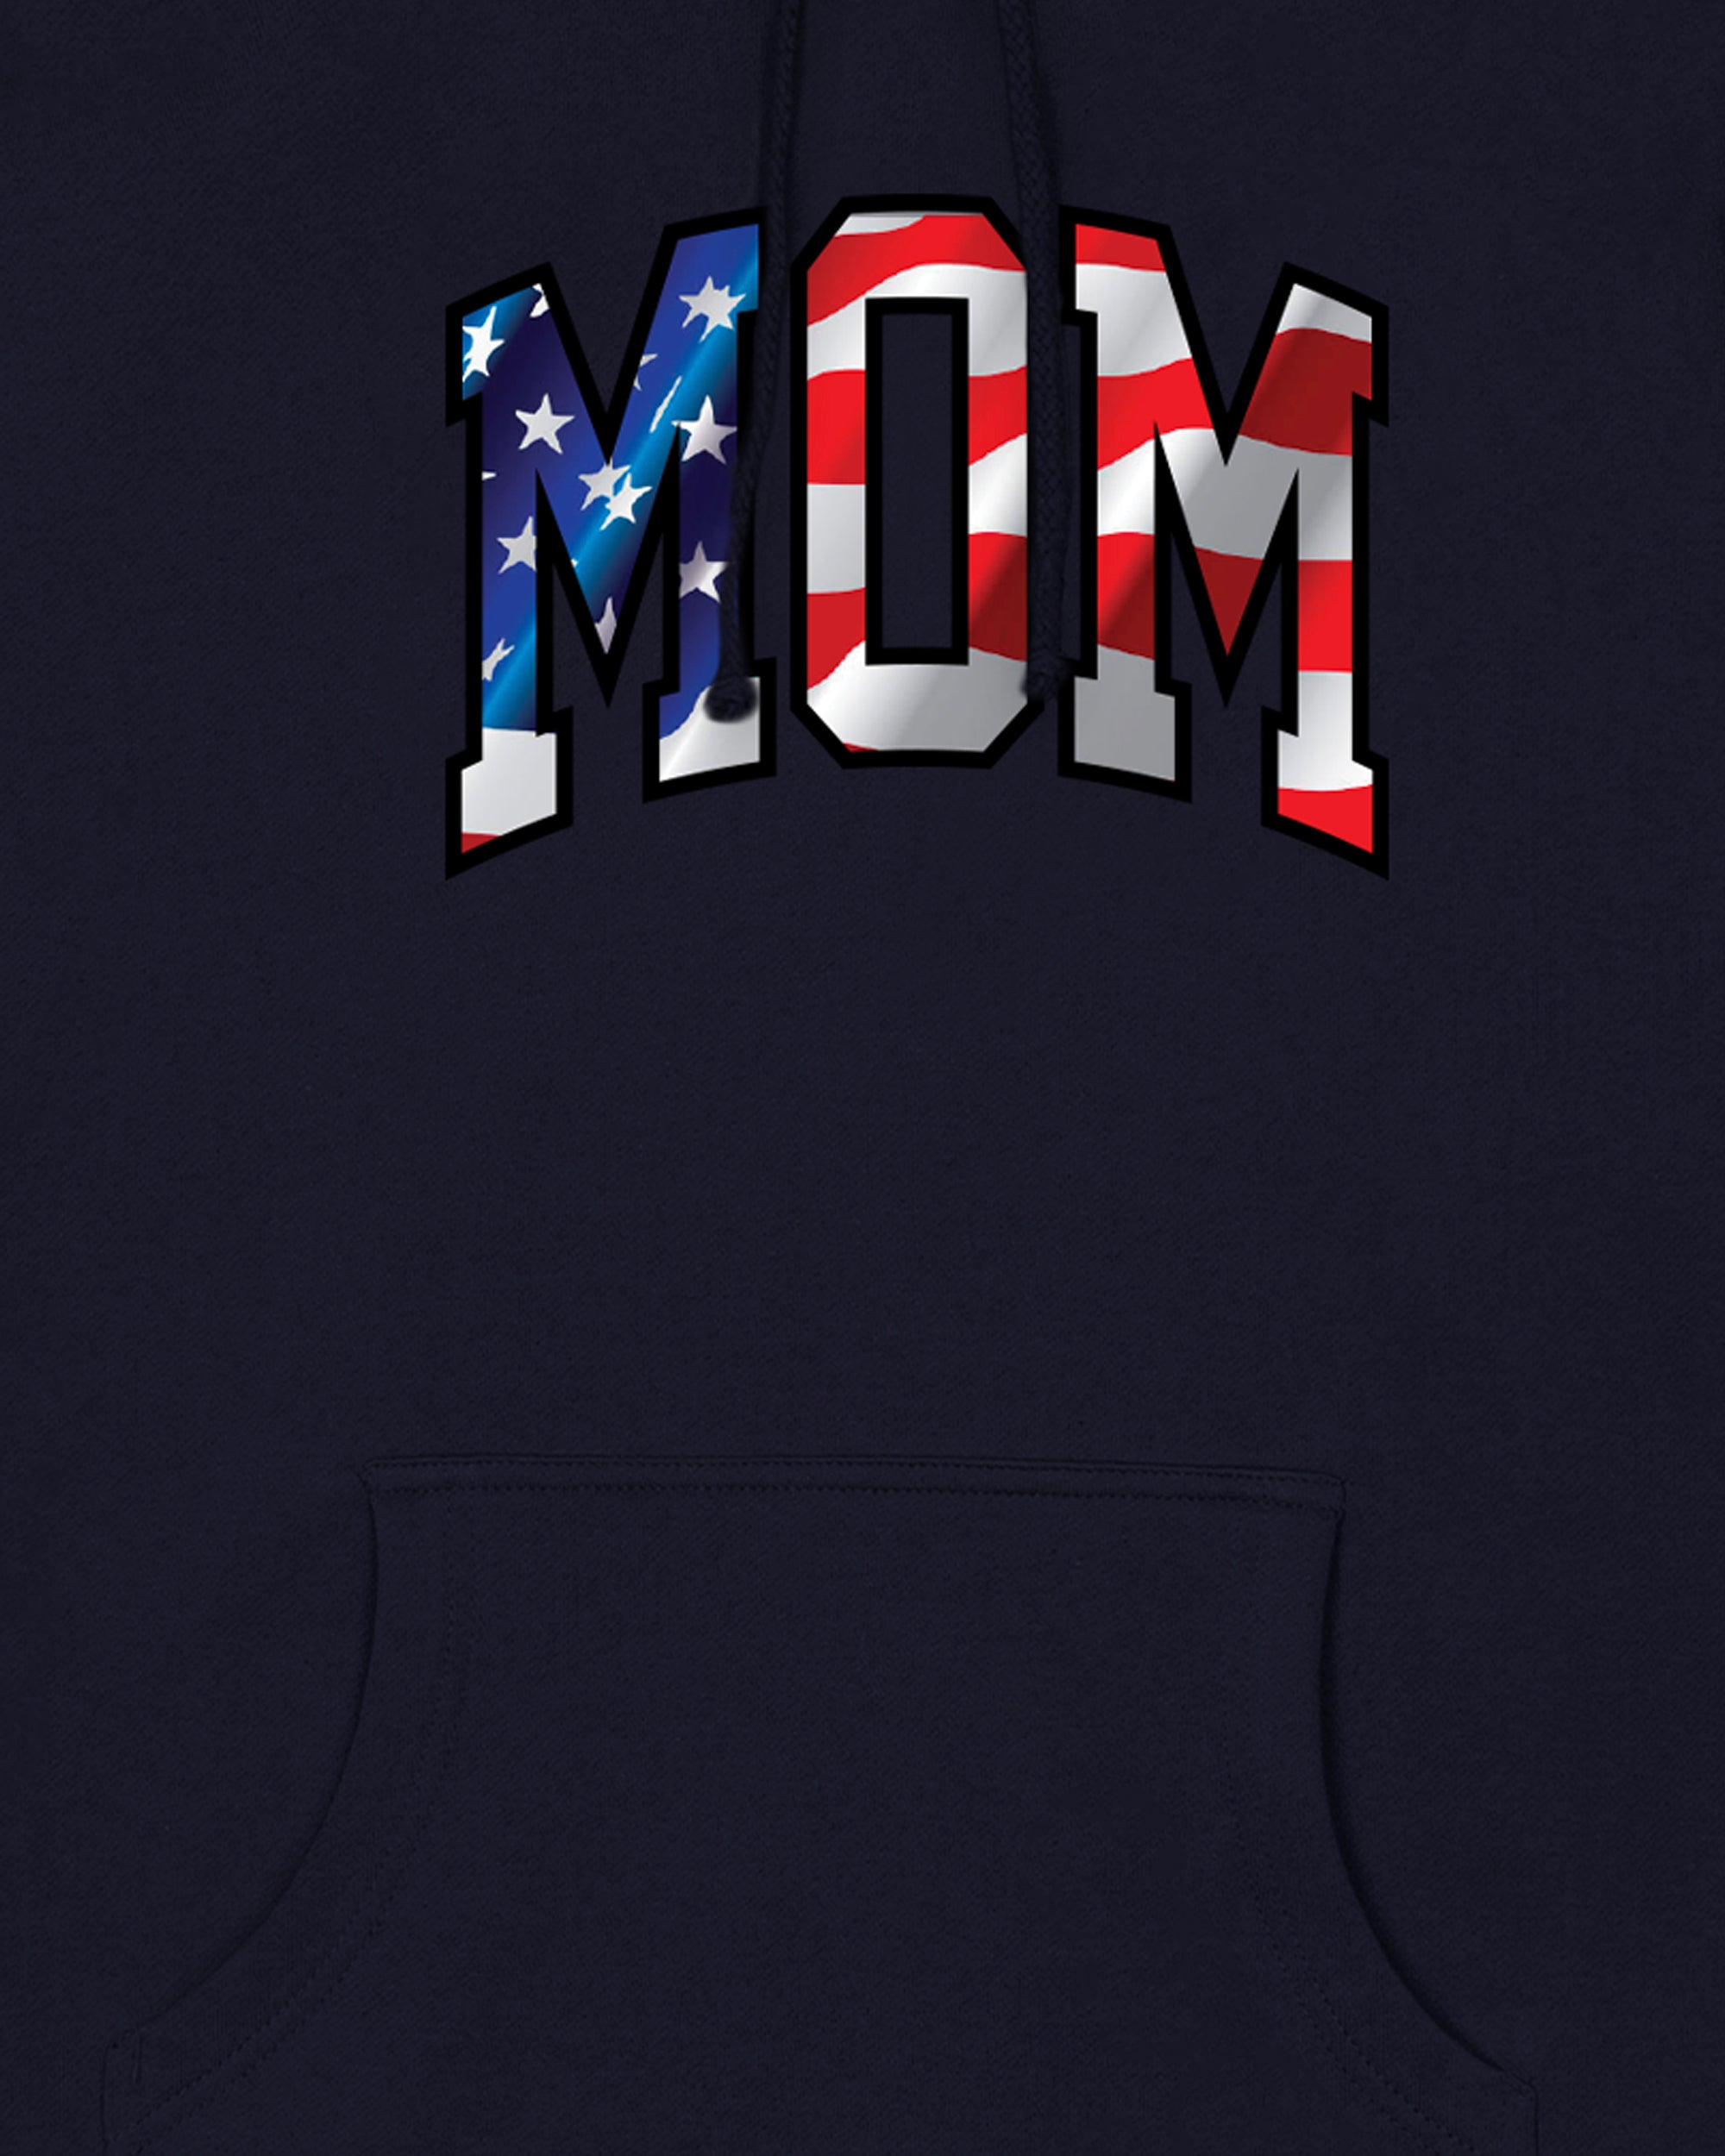 American Flag MOM Arc Logo Hoodie - Navy